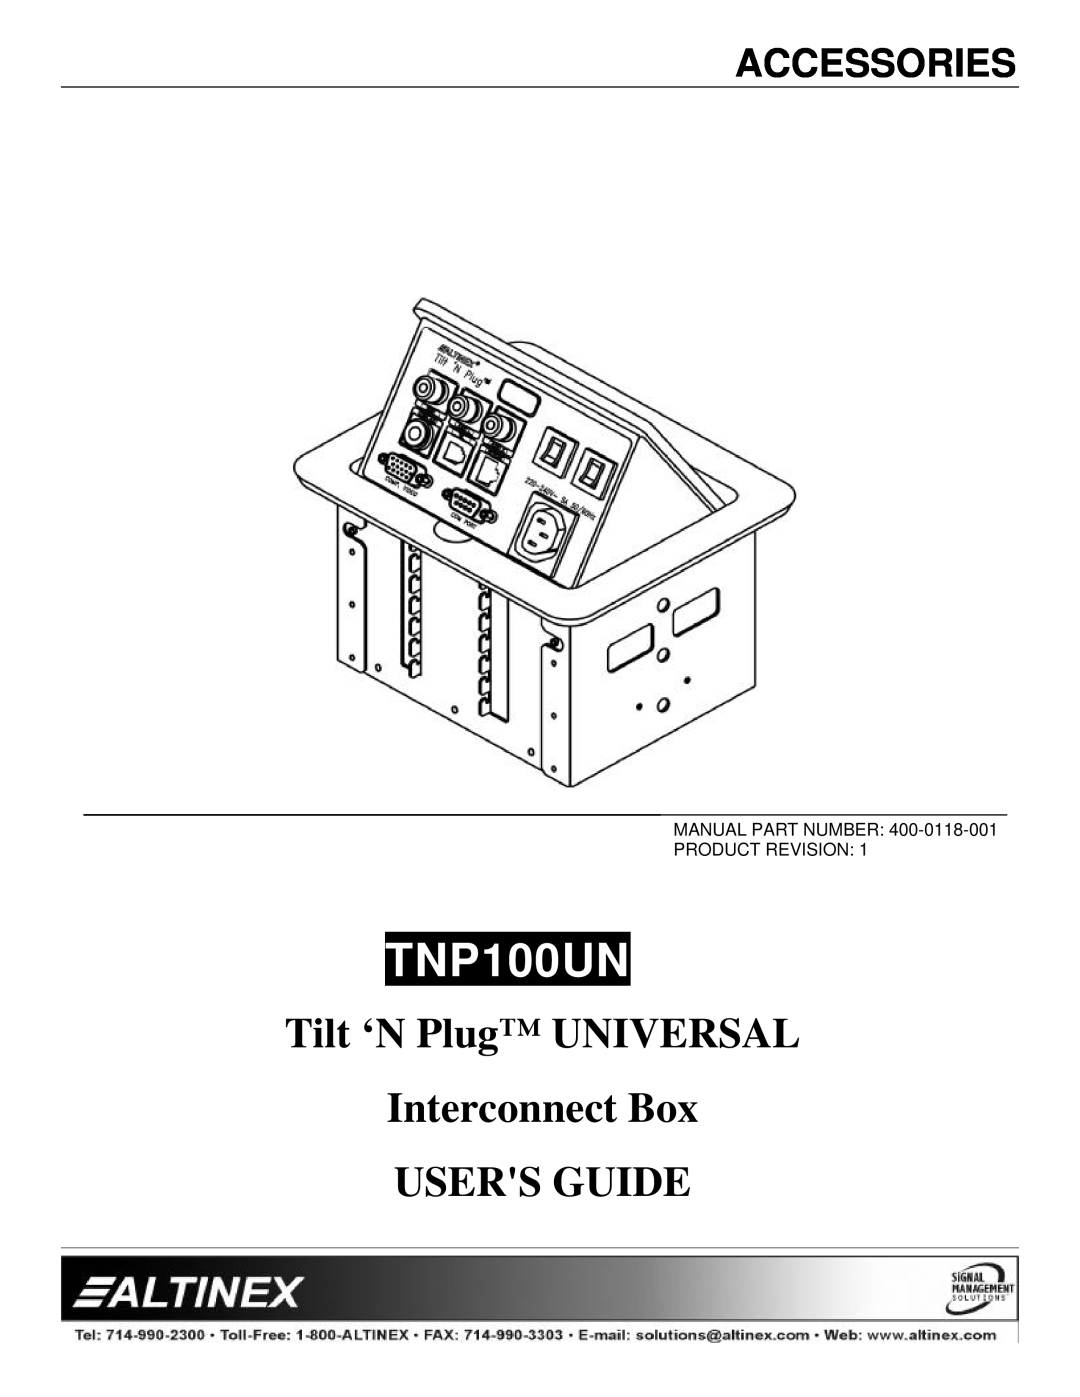 Altinex manual Accessories, TNP100UNUN, Tilt ‘N Plug UNIVERSAL Interconnect Box USERS GUIDE 